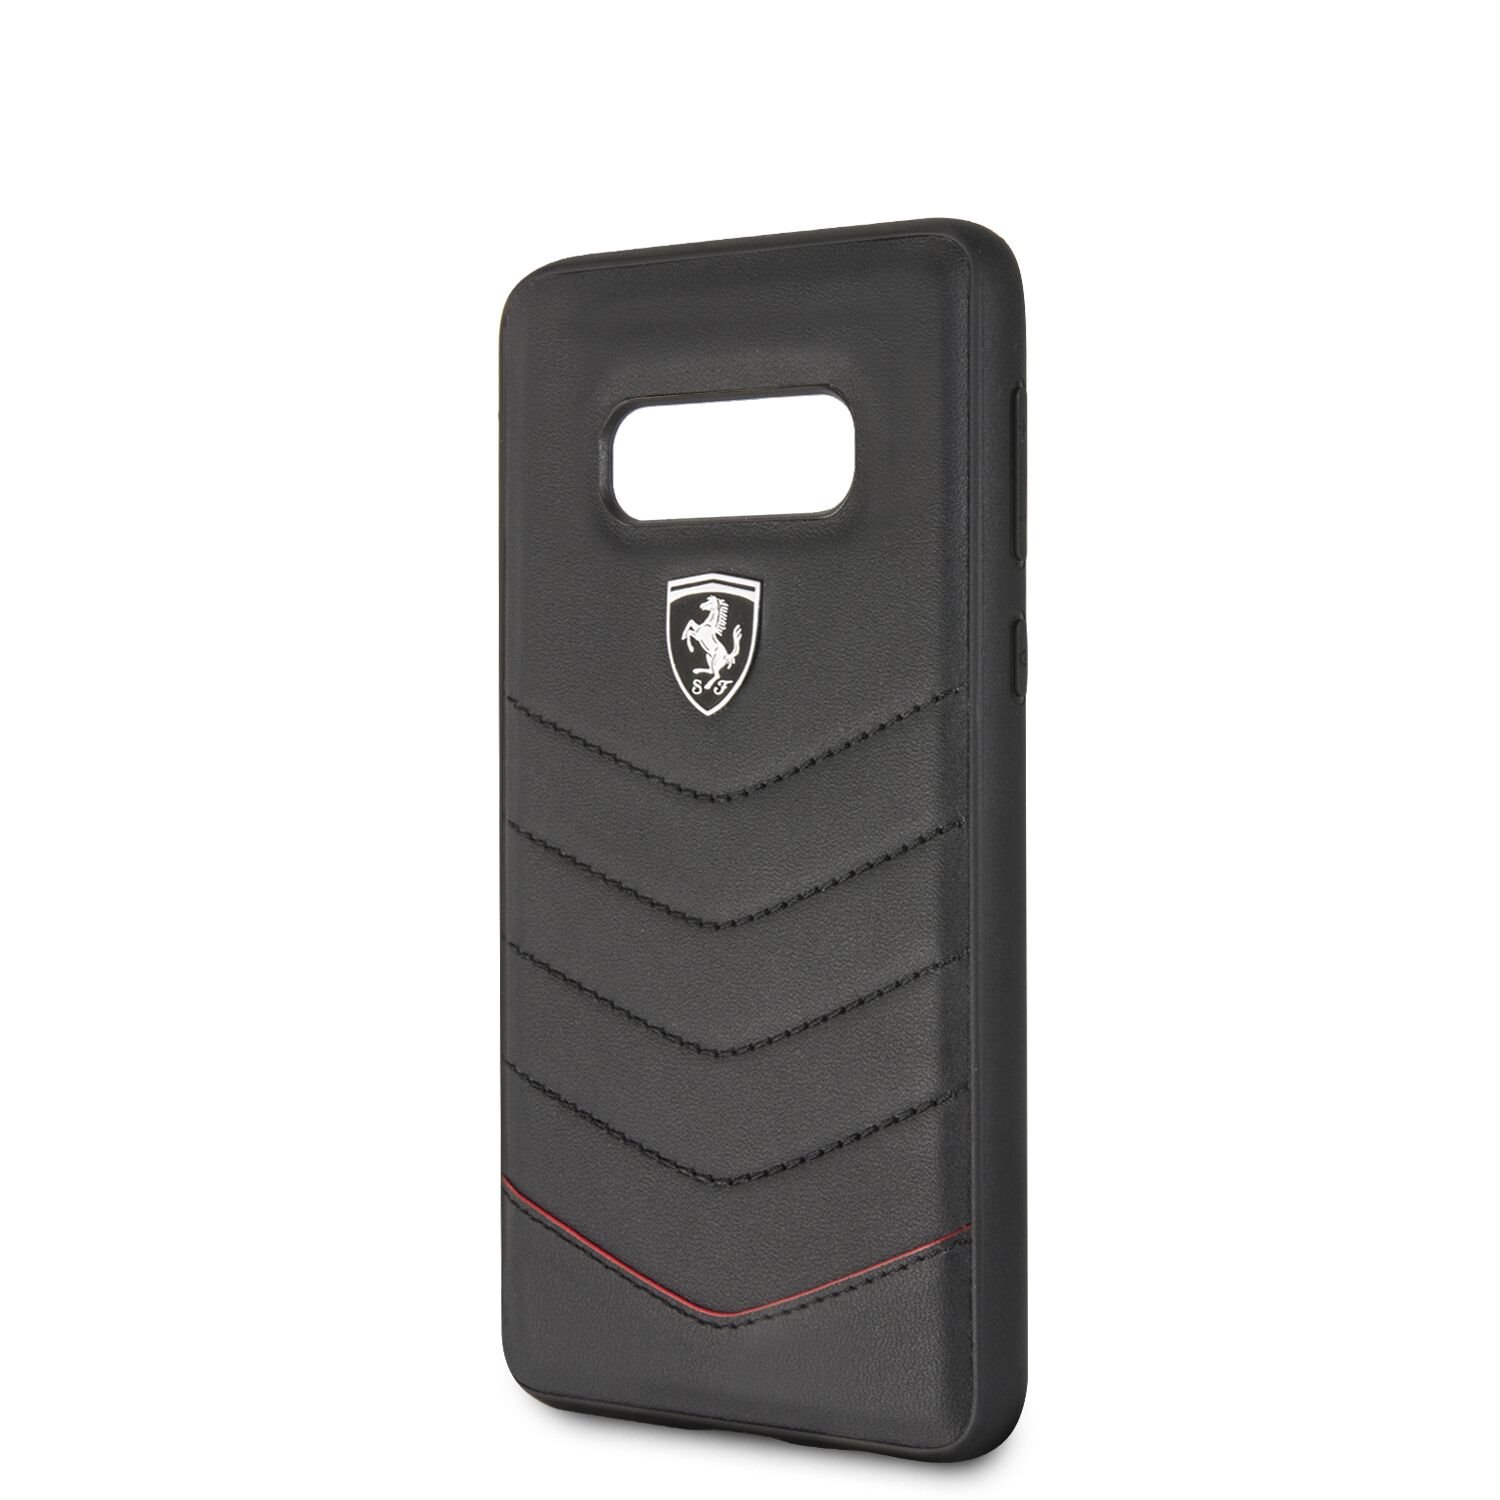 Ferrari Heritage Quilted FEHQUHCS10LBK kožený kryt pro Samsung Galaxy S10e black